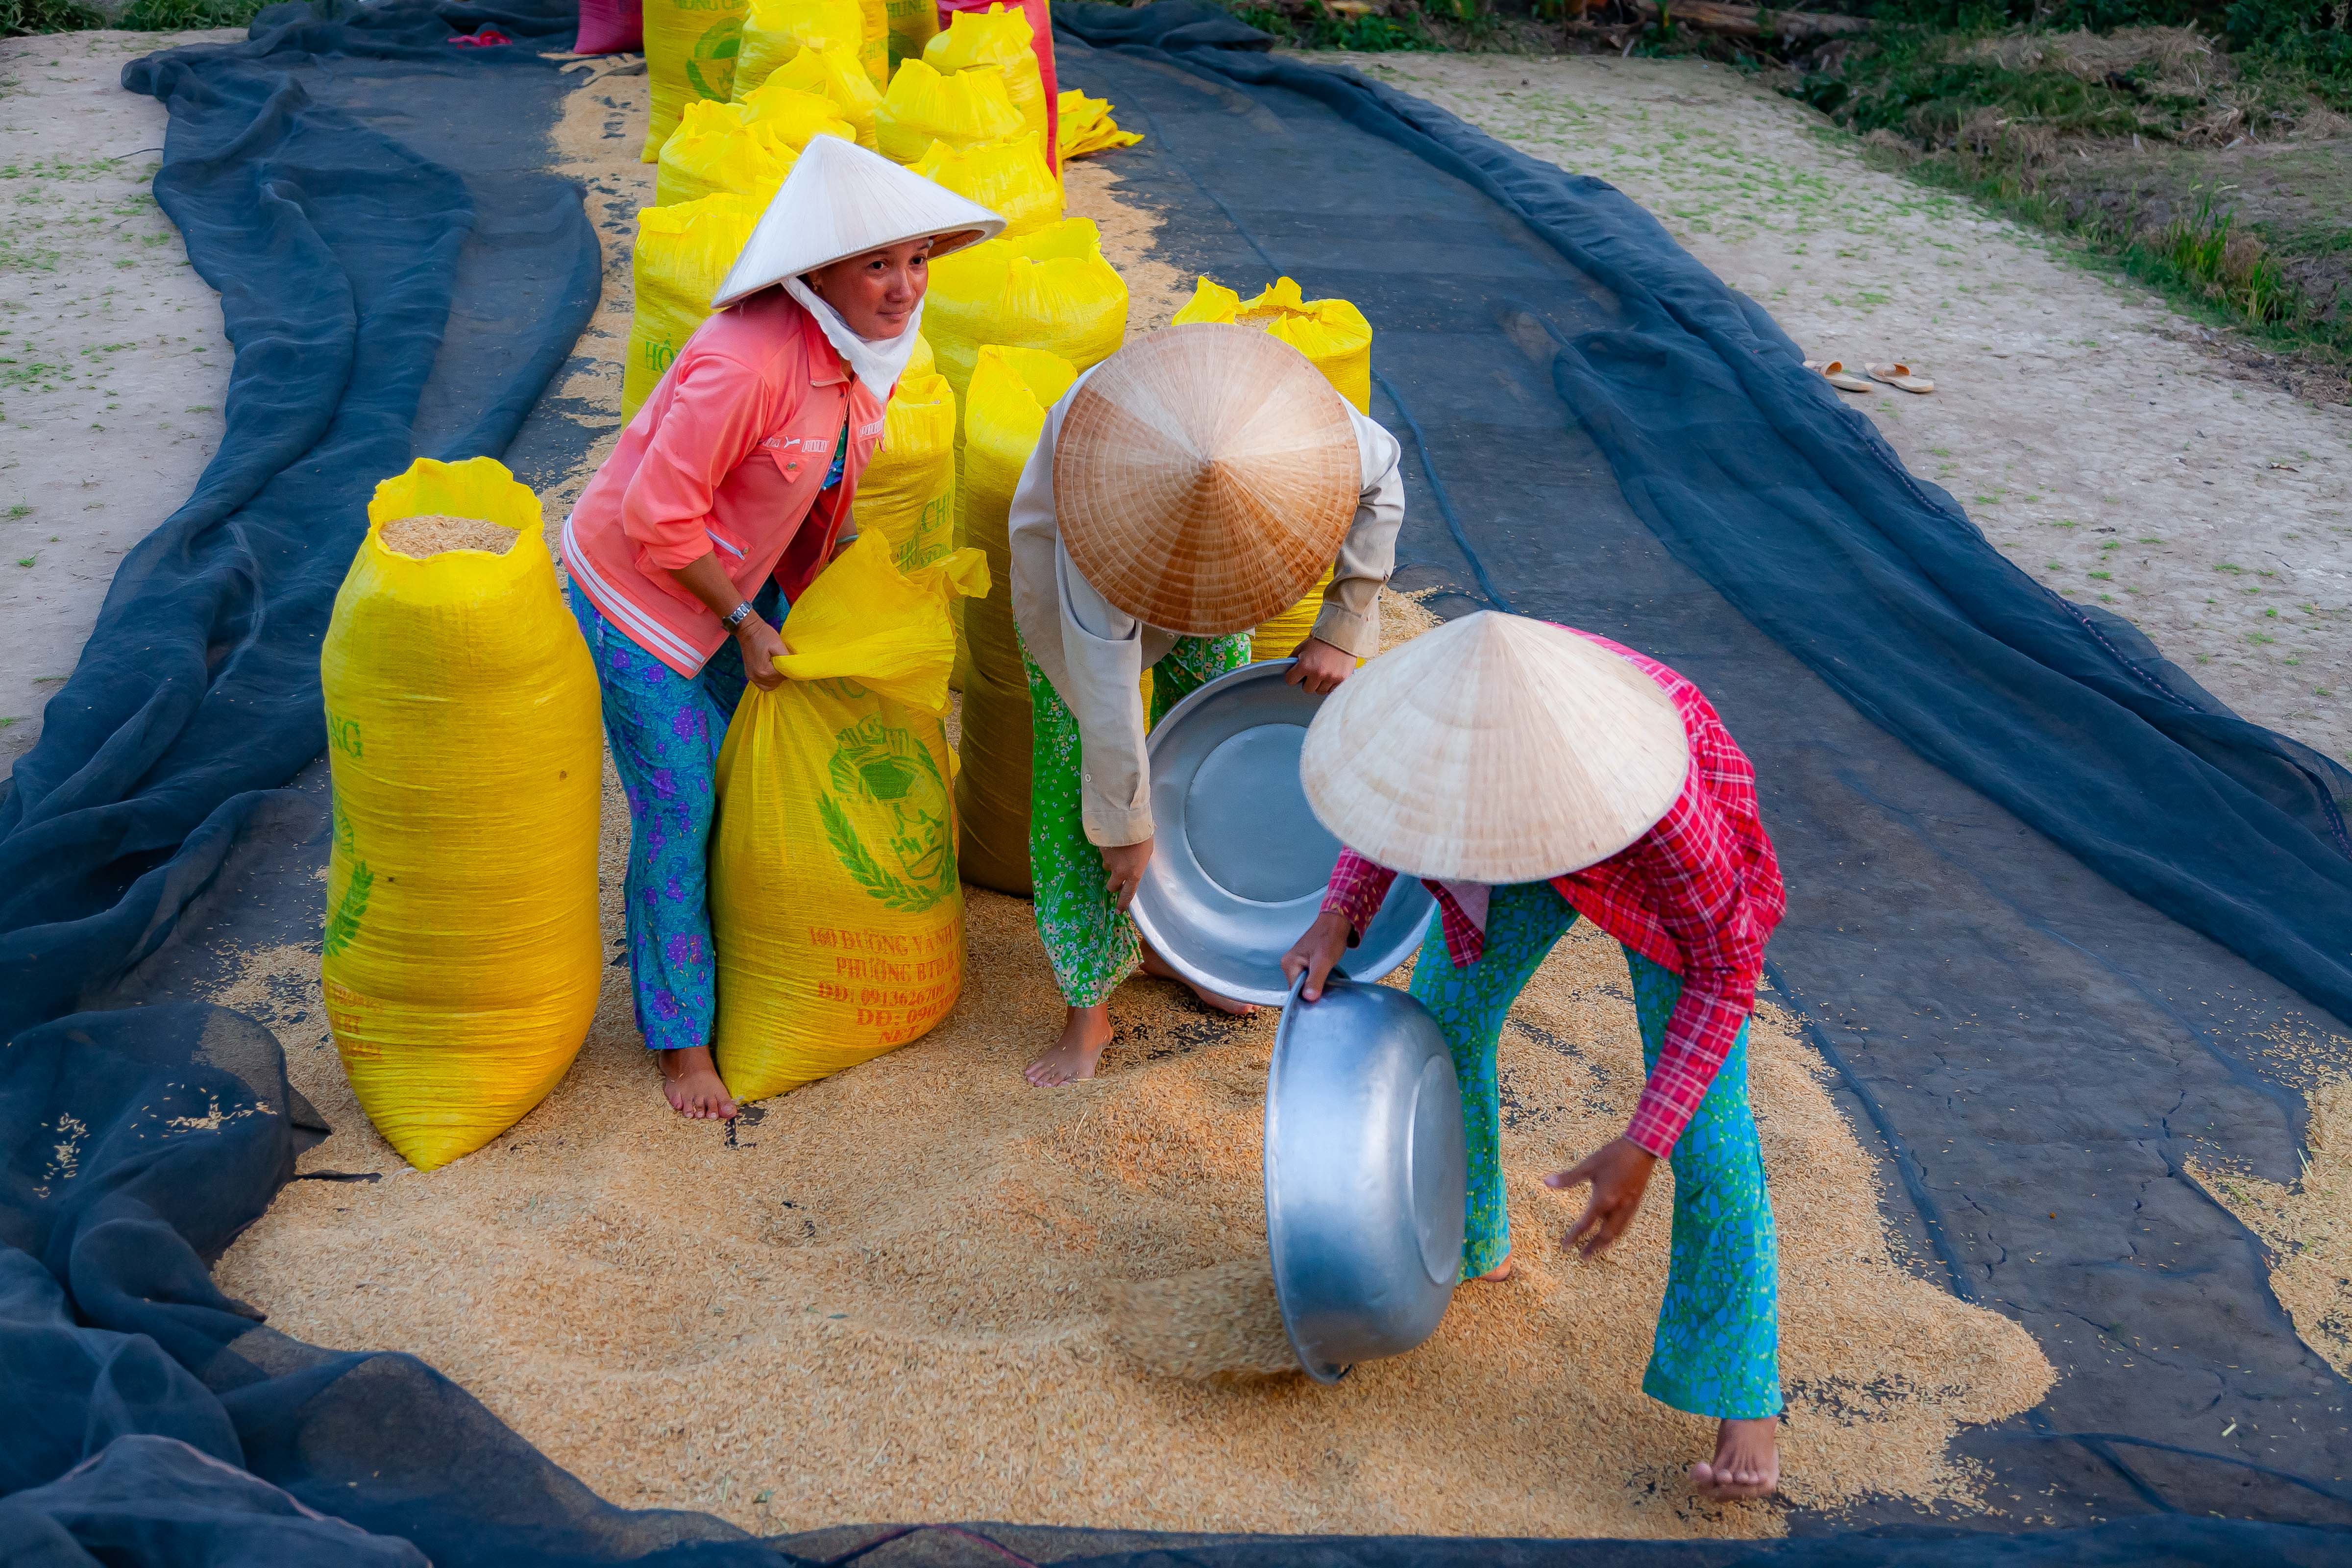 Vietnam, Bac Lieu Prov, Rice Bagging, 2010, IMG 1480